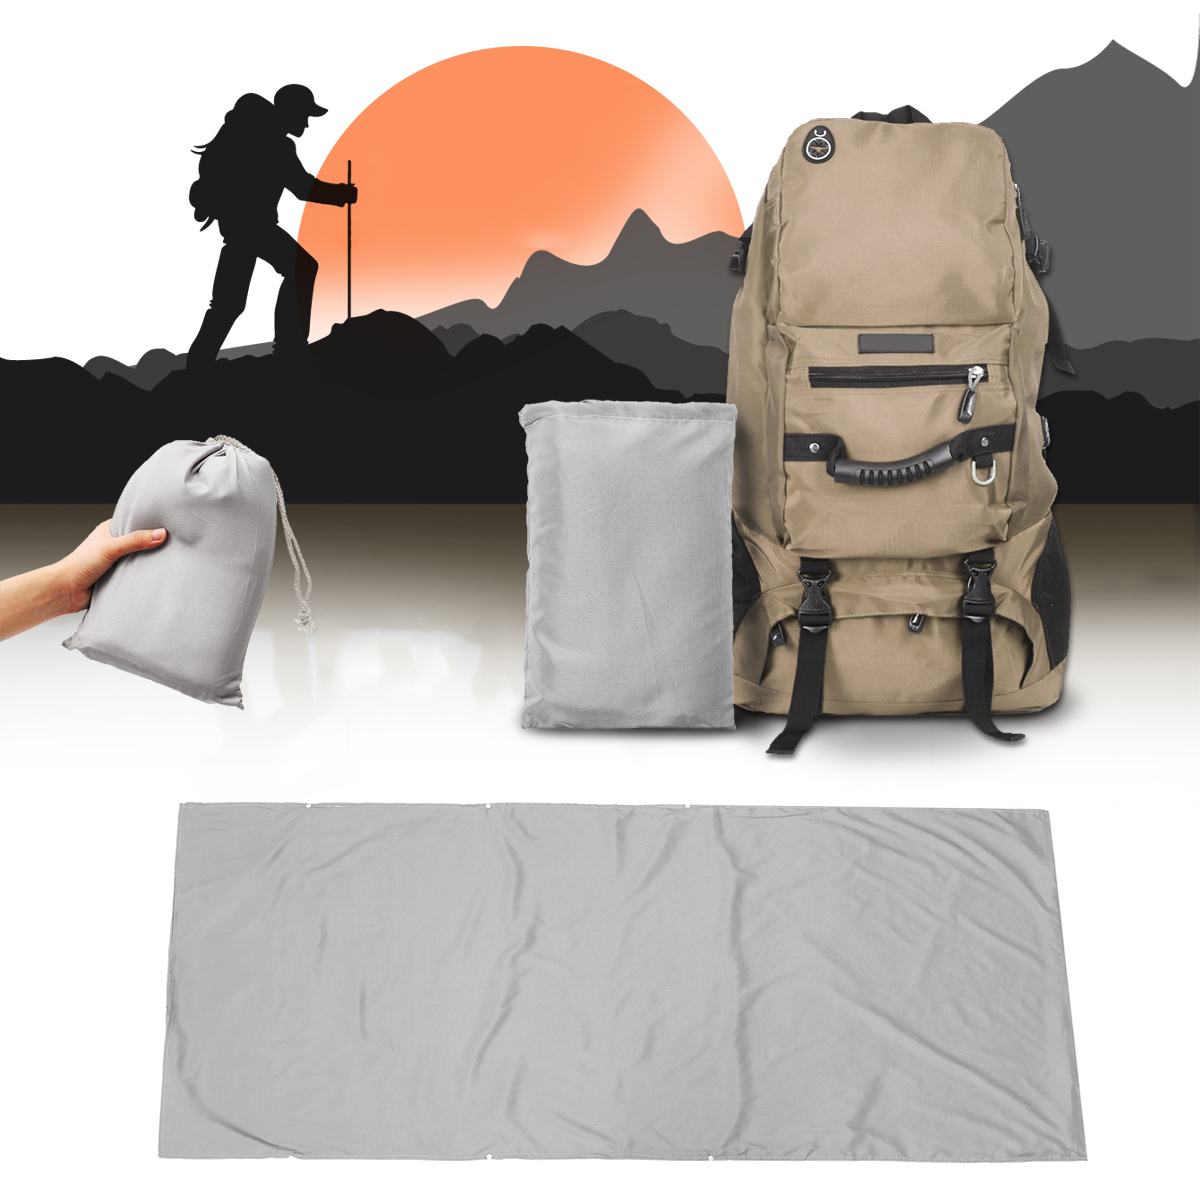 Portable-Sleeping-Bag-Cover-Ultralight-Sleep-Sheet-Outdoor-Camping-Hiking-Travel-Bag-1883995-1